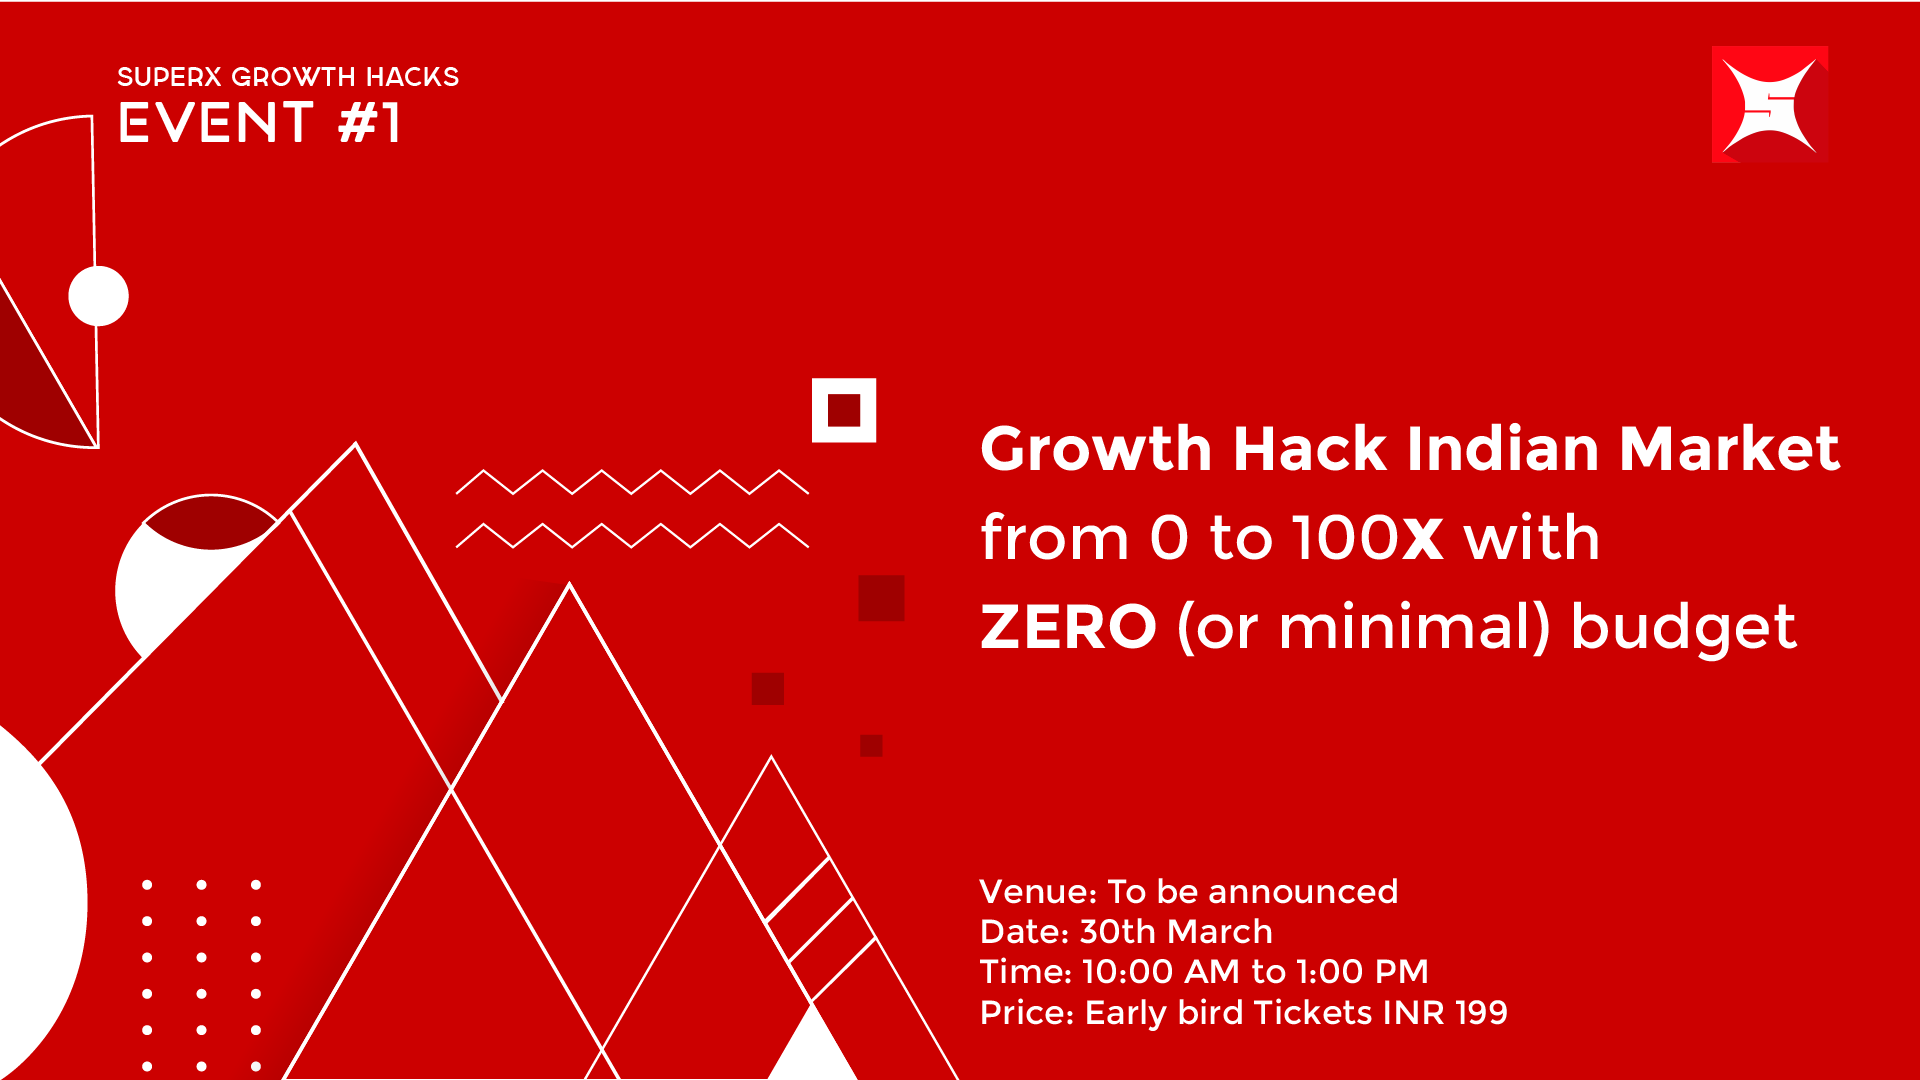 SuperX Growth Hacks #1: Growth Hack Indian Market from 0 to 100x with zero (or minimal) budget, Bangalore, Karnataka, India